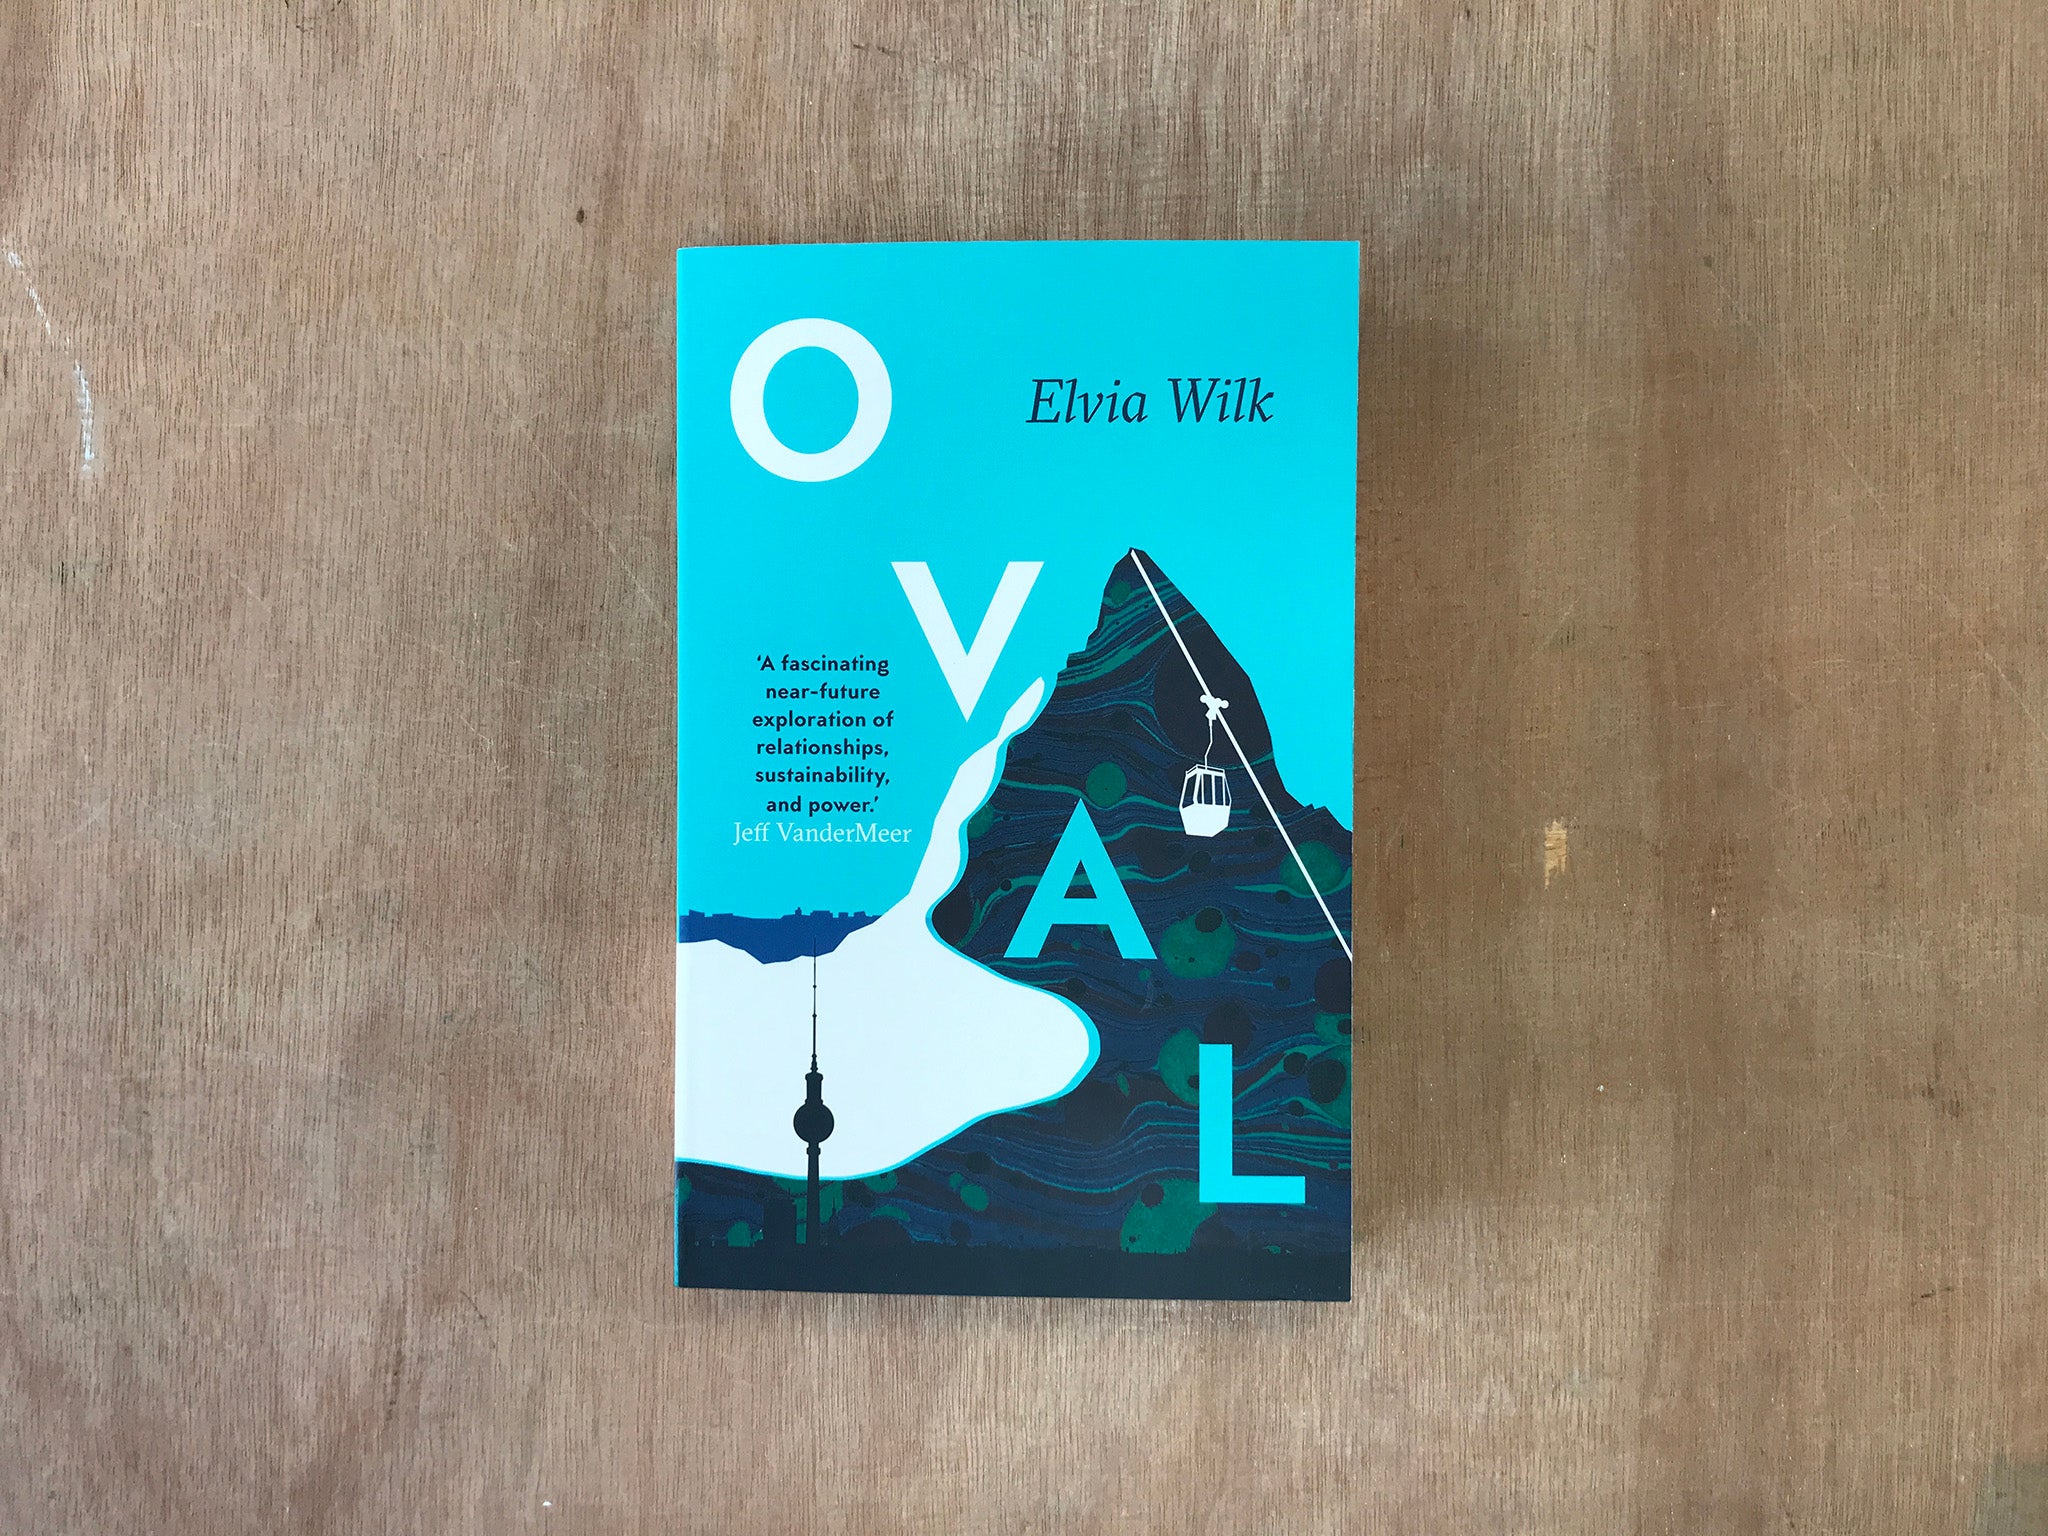 OVAL by Elvia Wilk